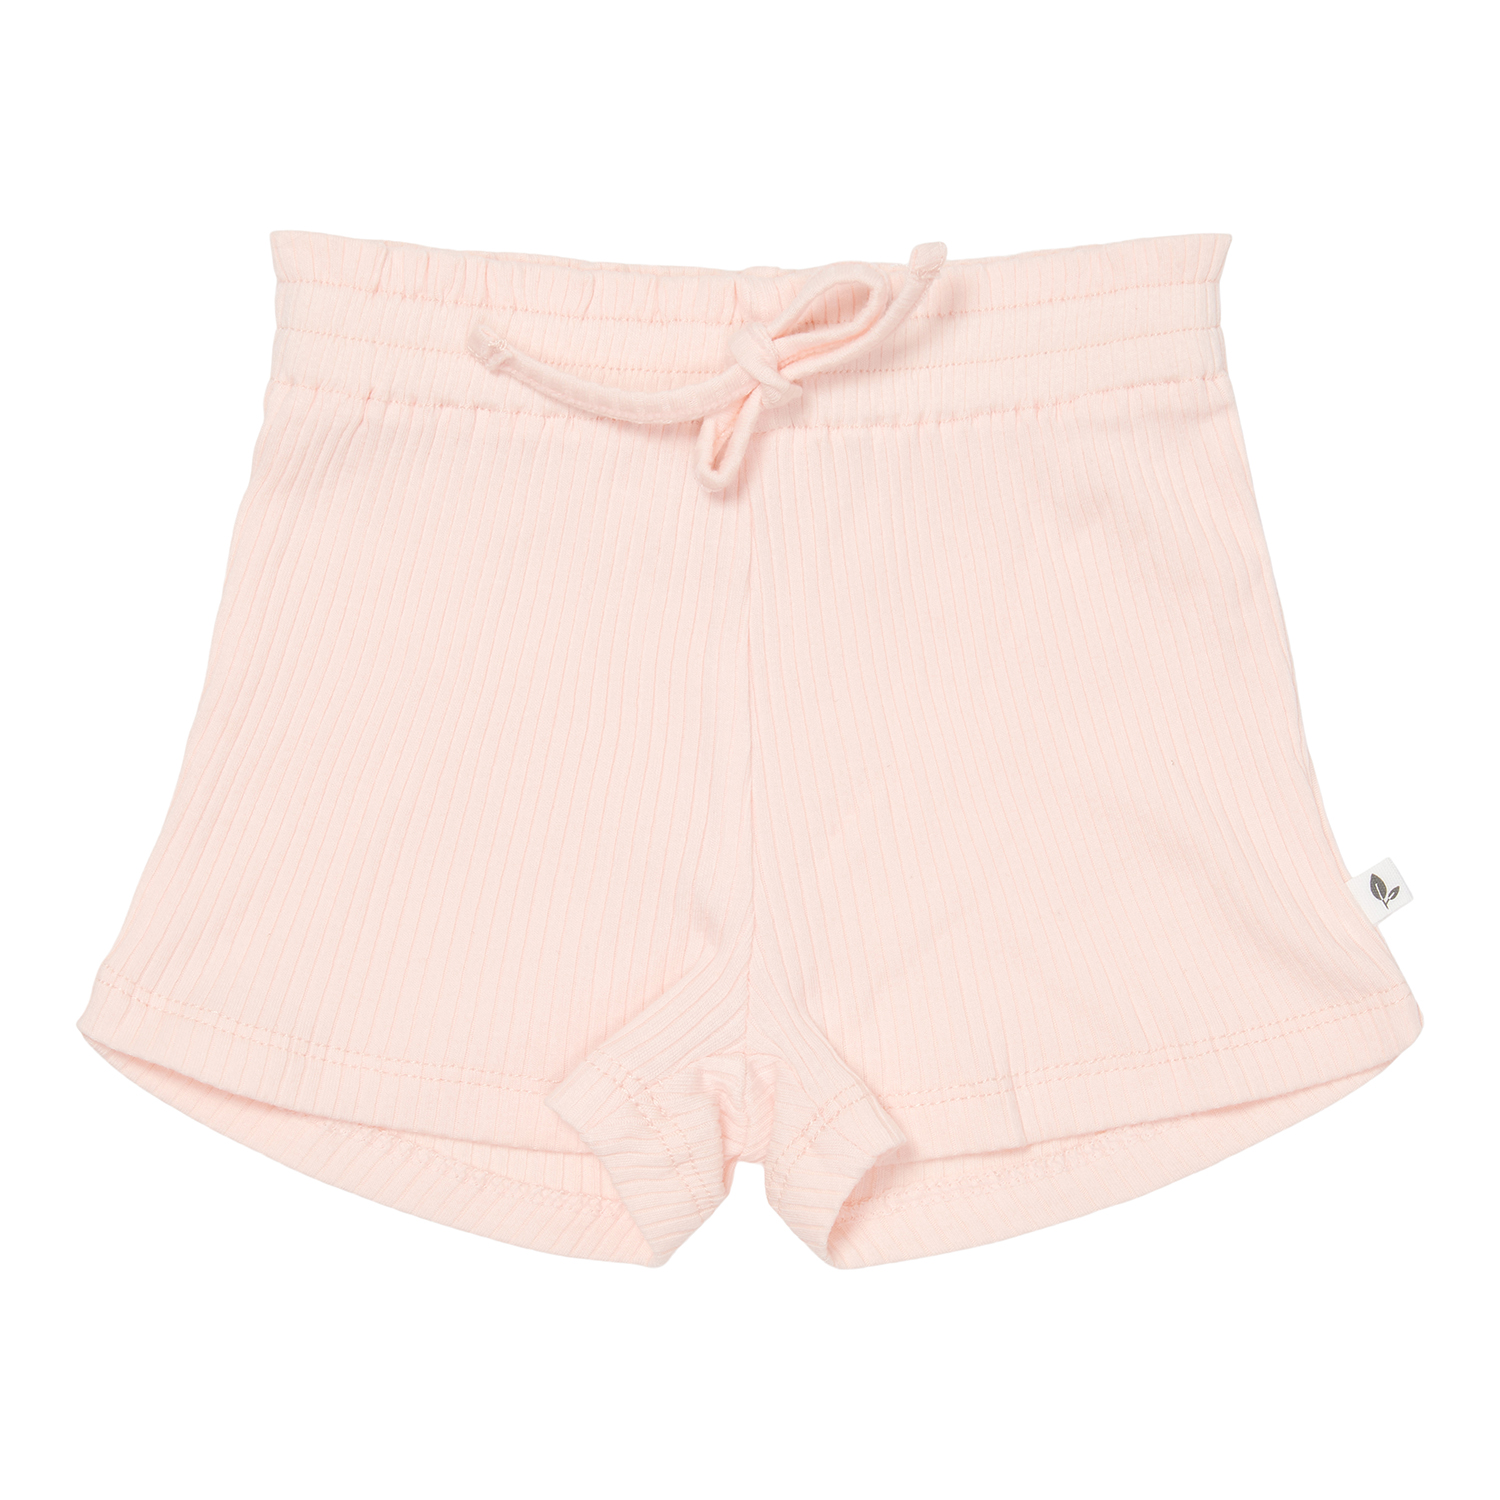 Kurze Hose / Shorts Rippe Pure soft pink (Gr. 74)